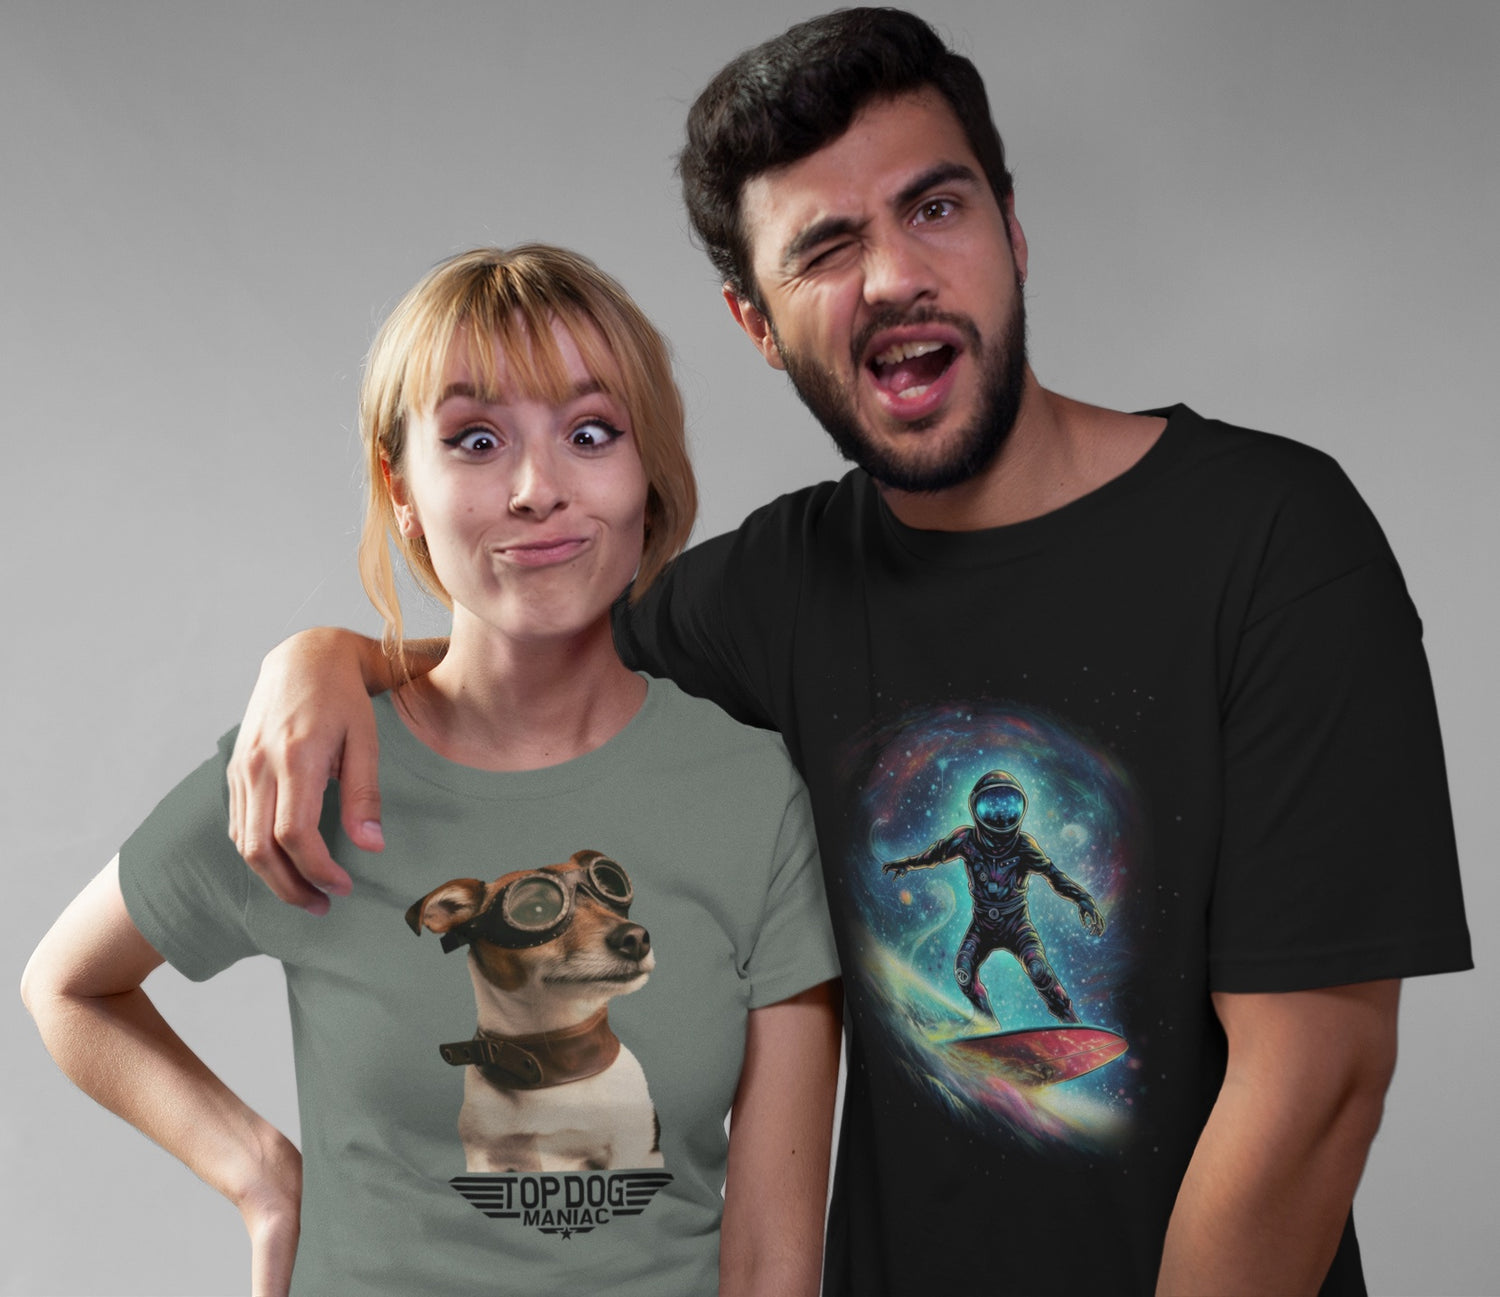 couple making faces and wearing slowpoke maniac meme wear shirts